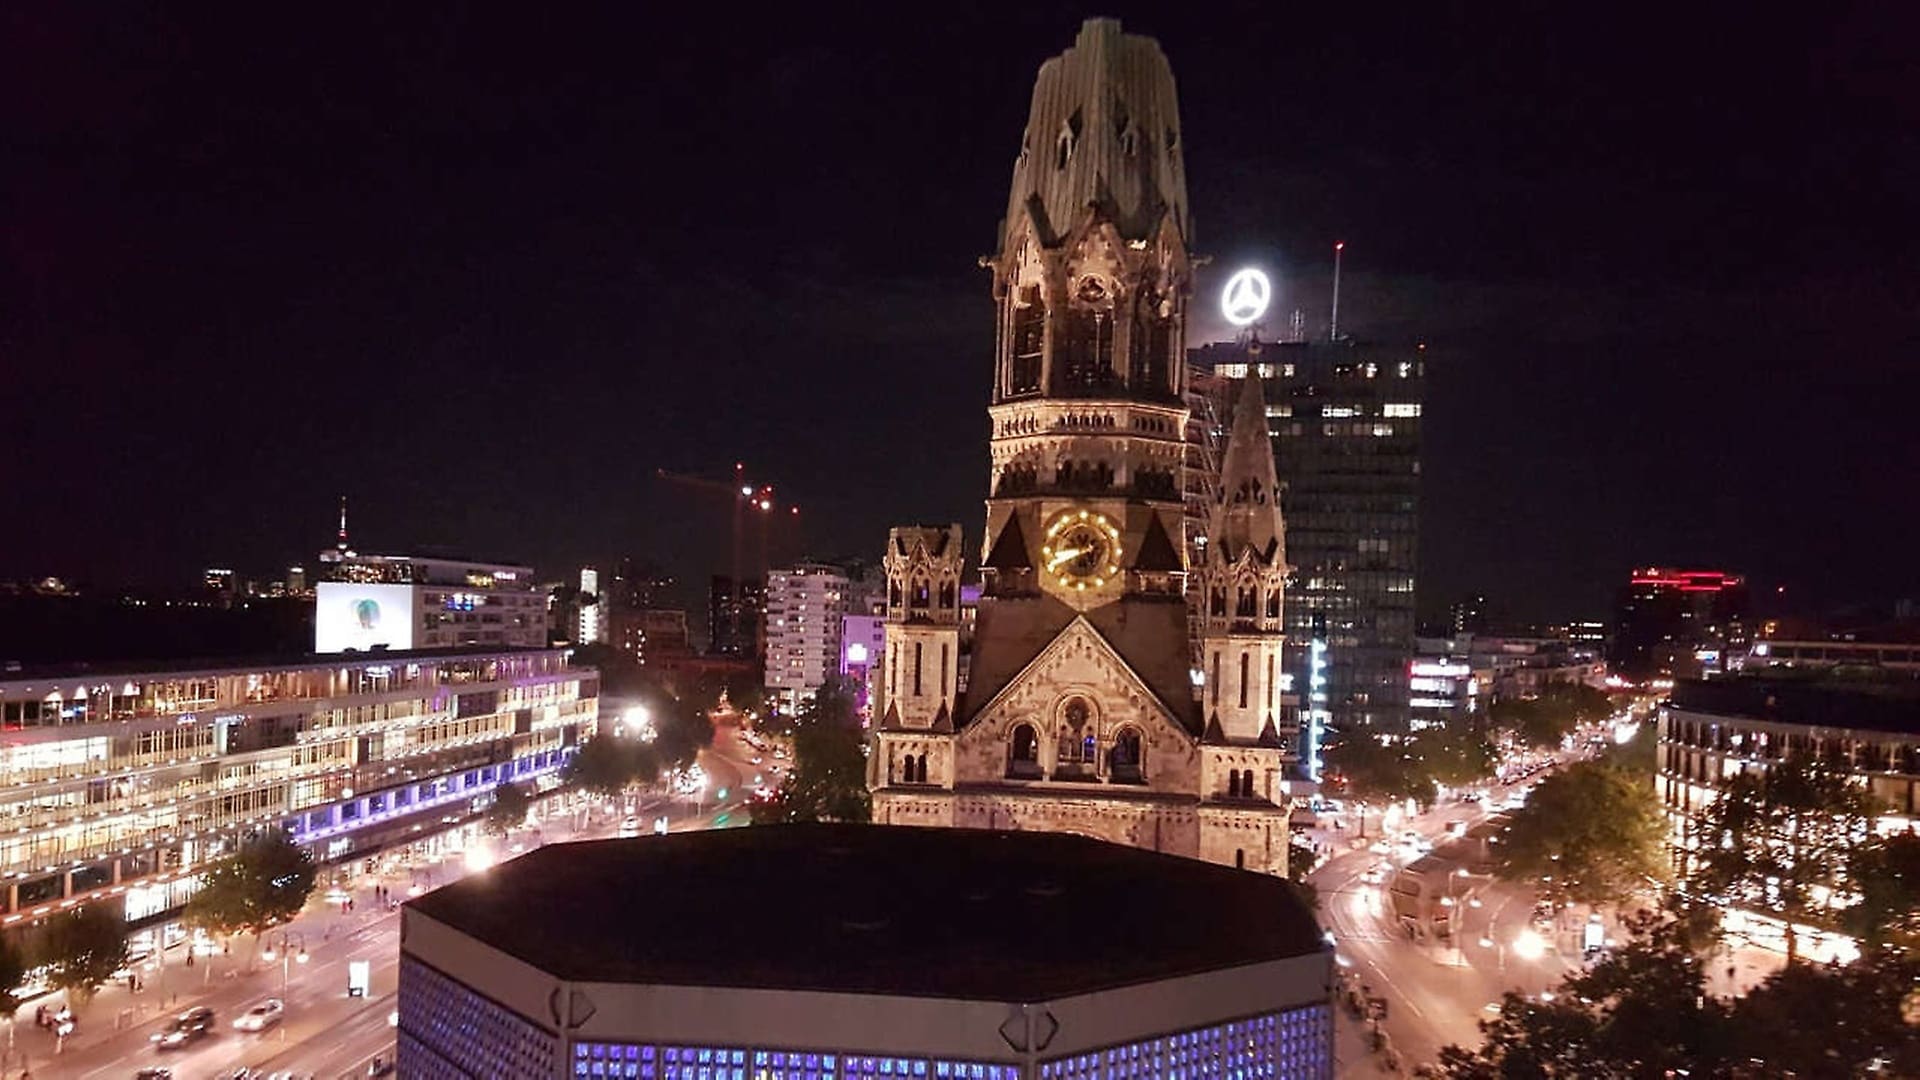 The Mercedes Star in Berlin shines behind the The Kaiser Wilhelm Memorial Church